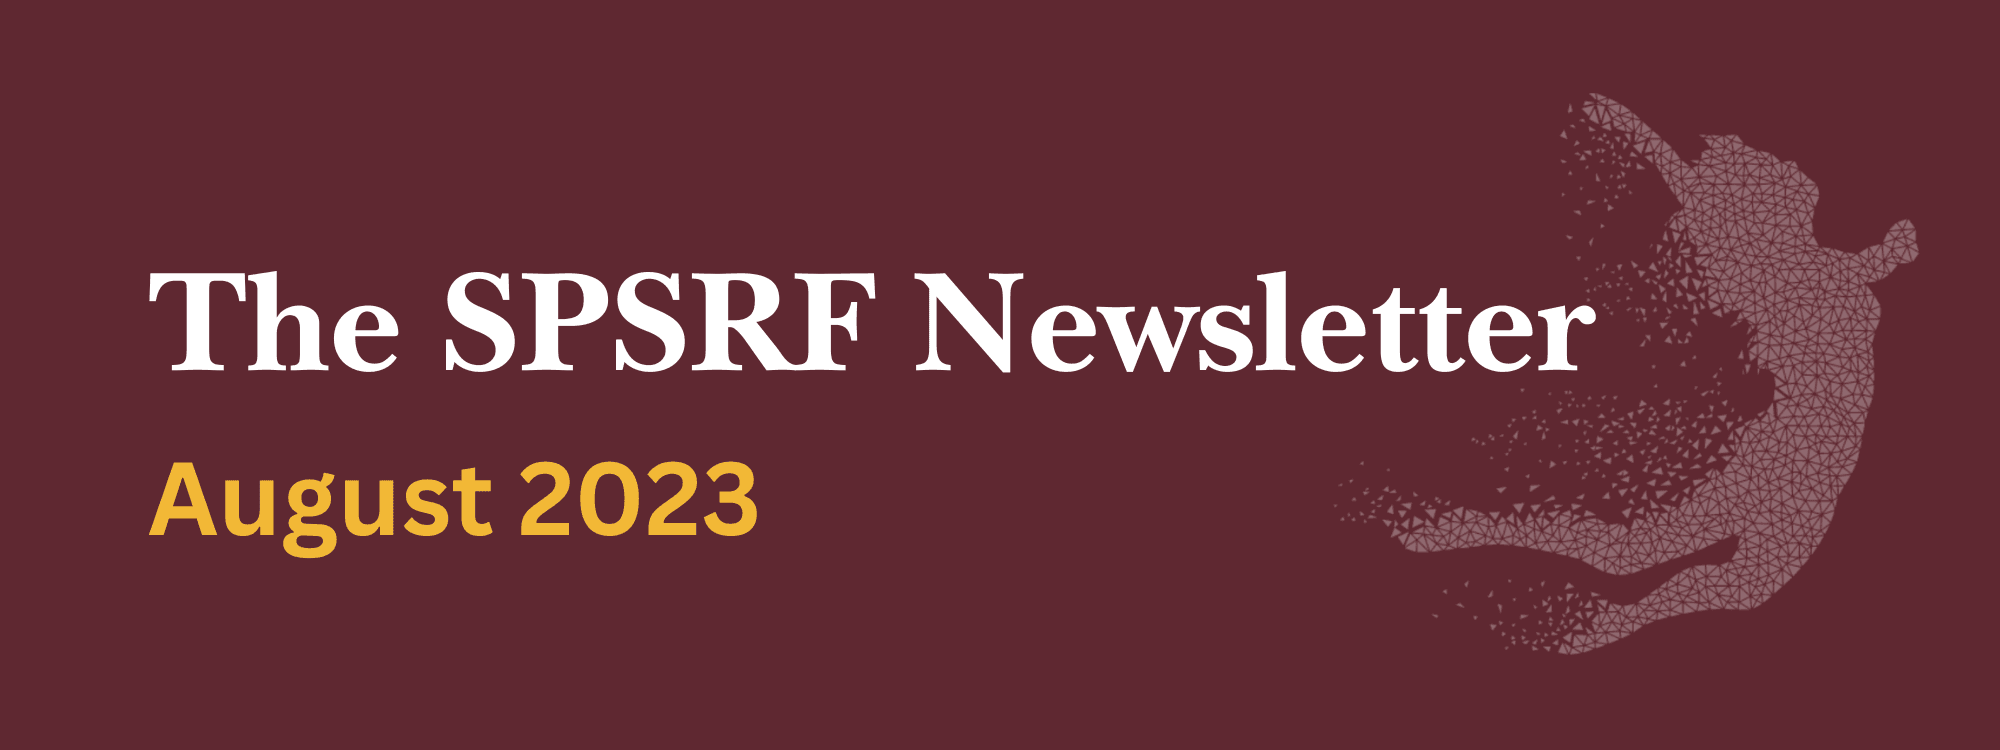 The SPSRF August 2023 Newsletter